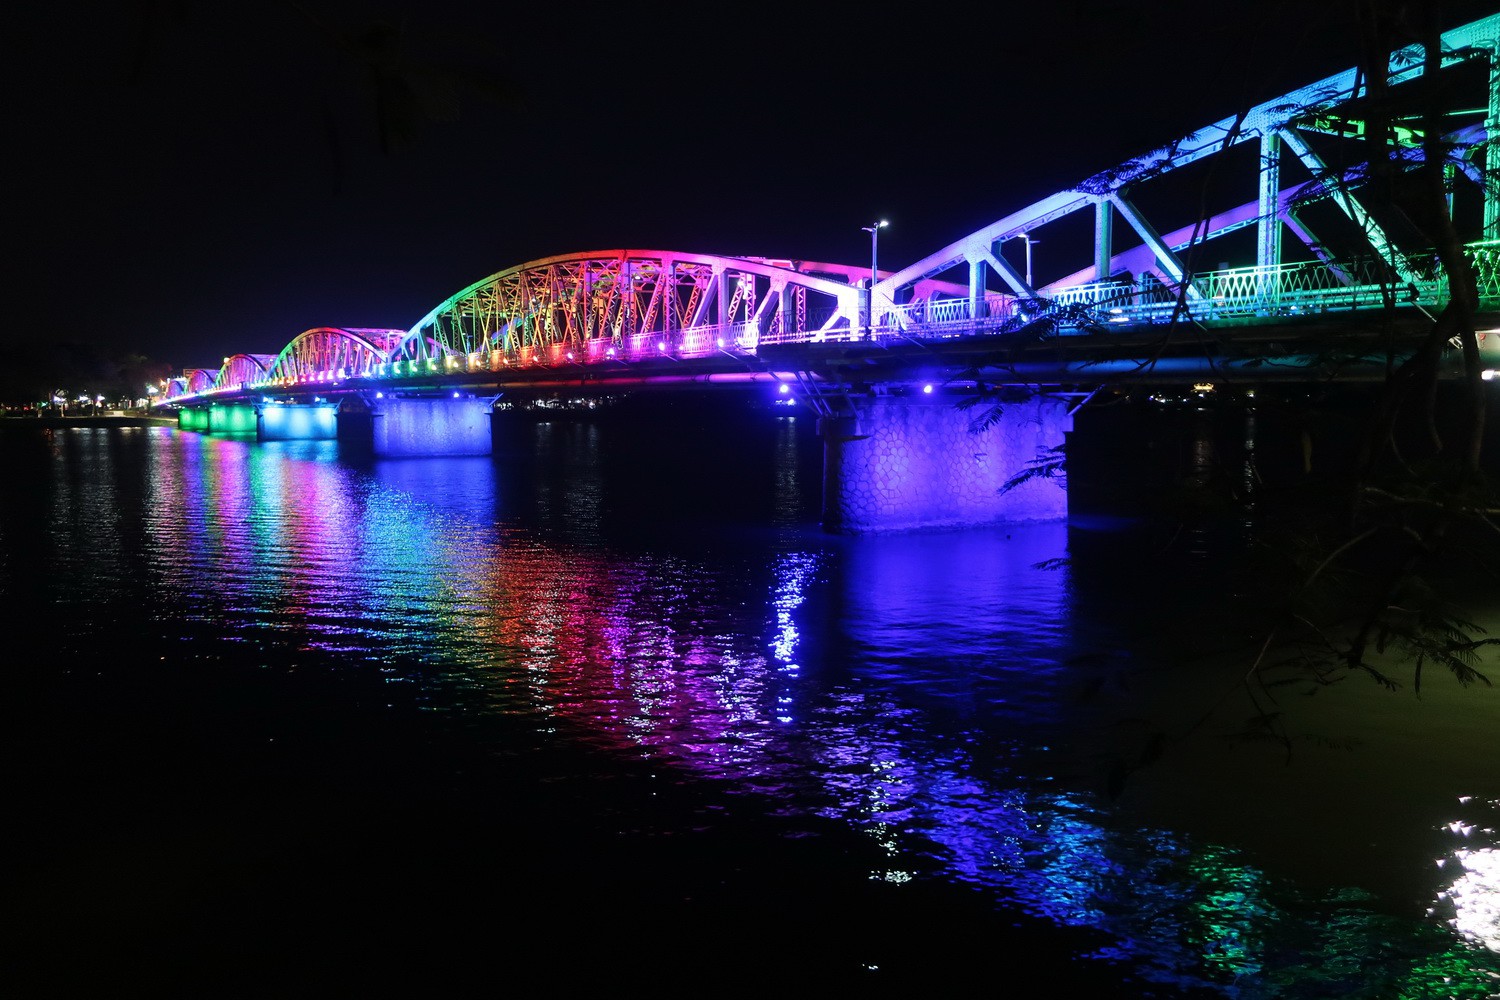 Truong Tien Bridge at night